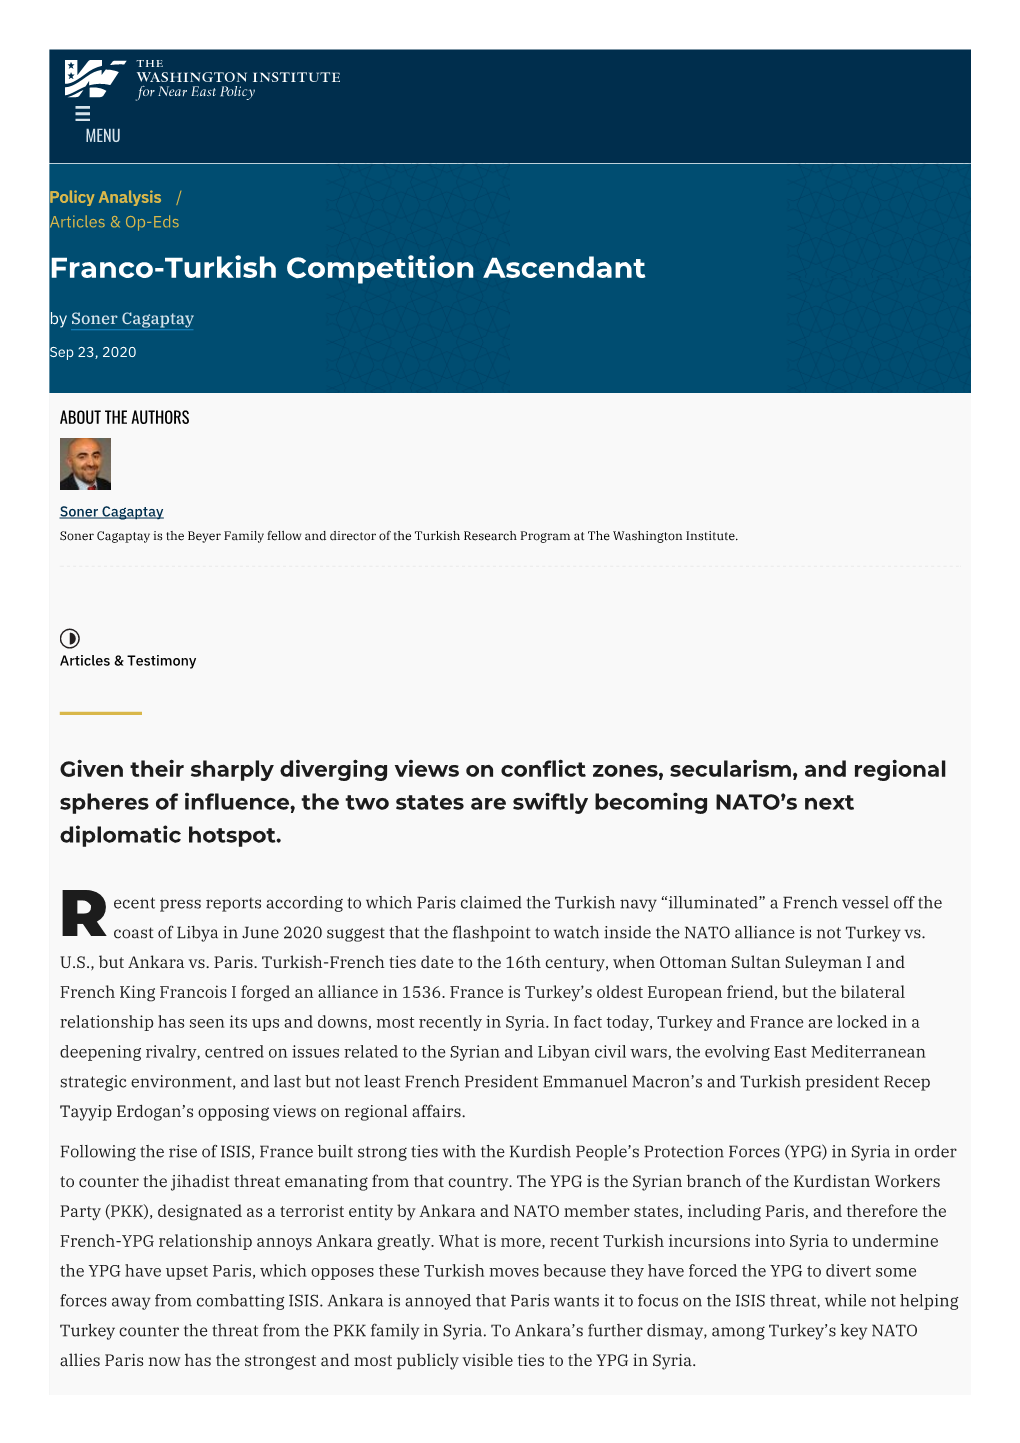 Franco-Turkish Competition Ascendant | the Washington Institute